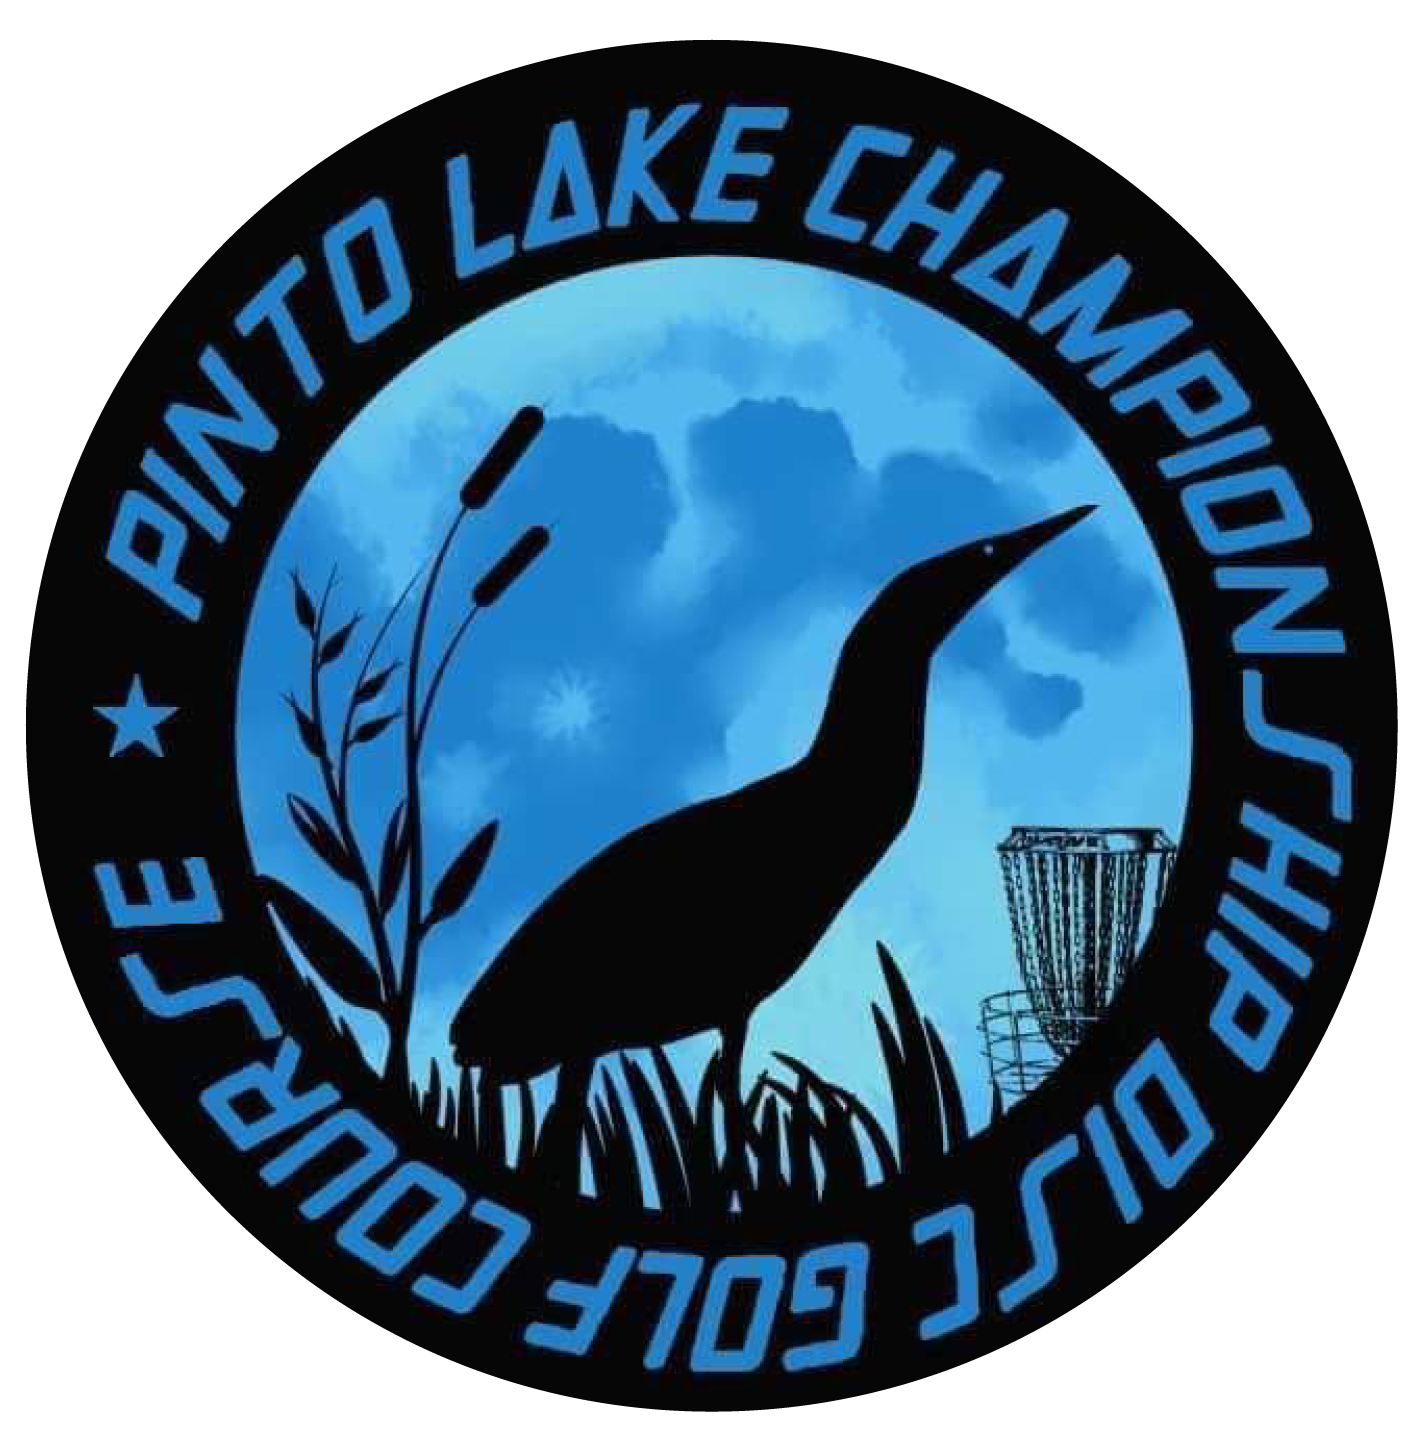 Pinto Lake Championship Disc Golf Course